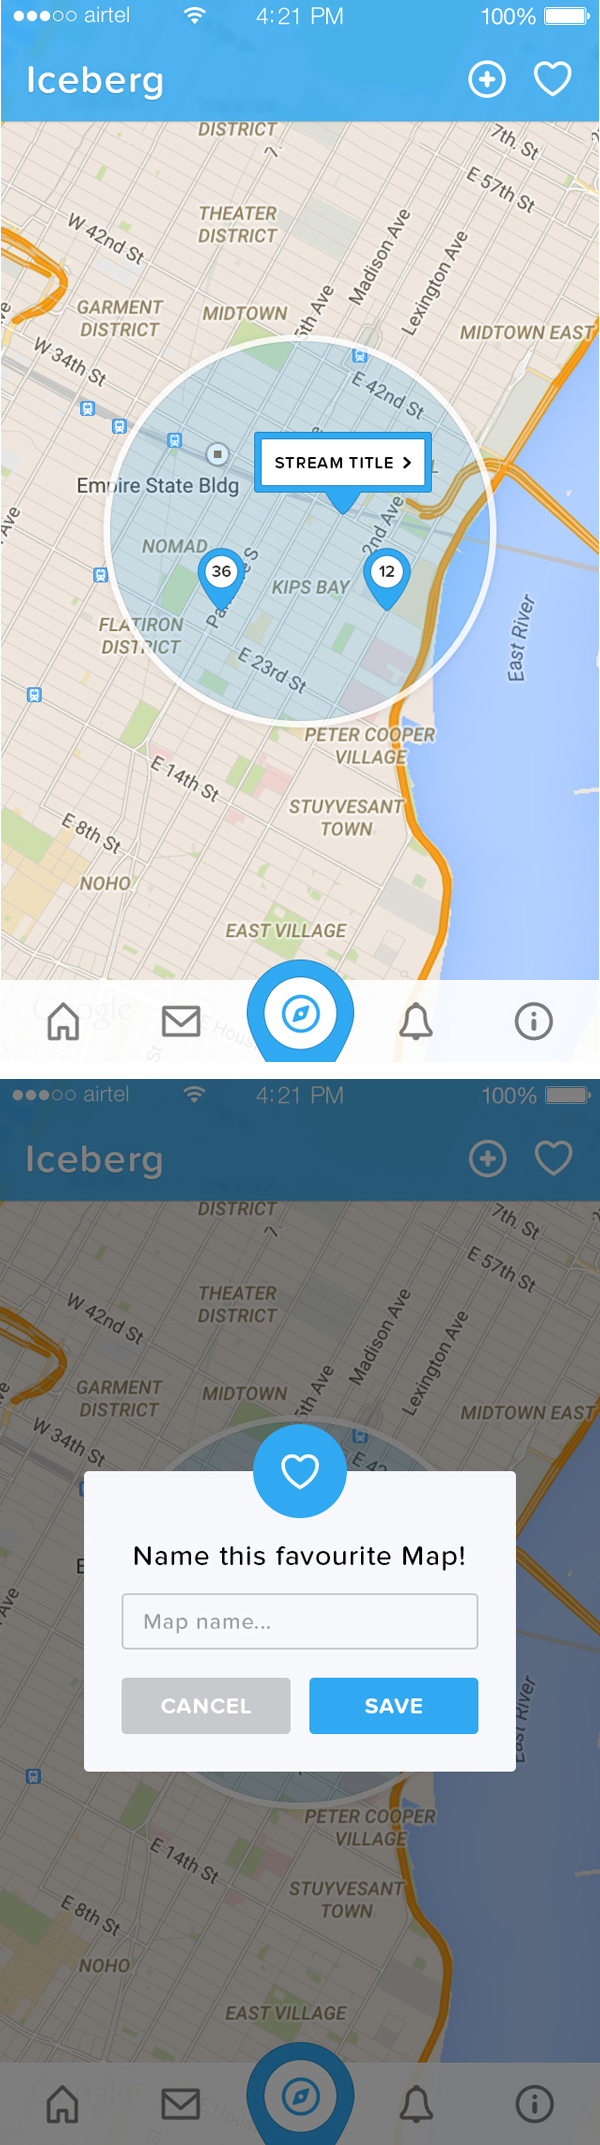 Iceberg iOS App UI Design by Sanjay Patel